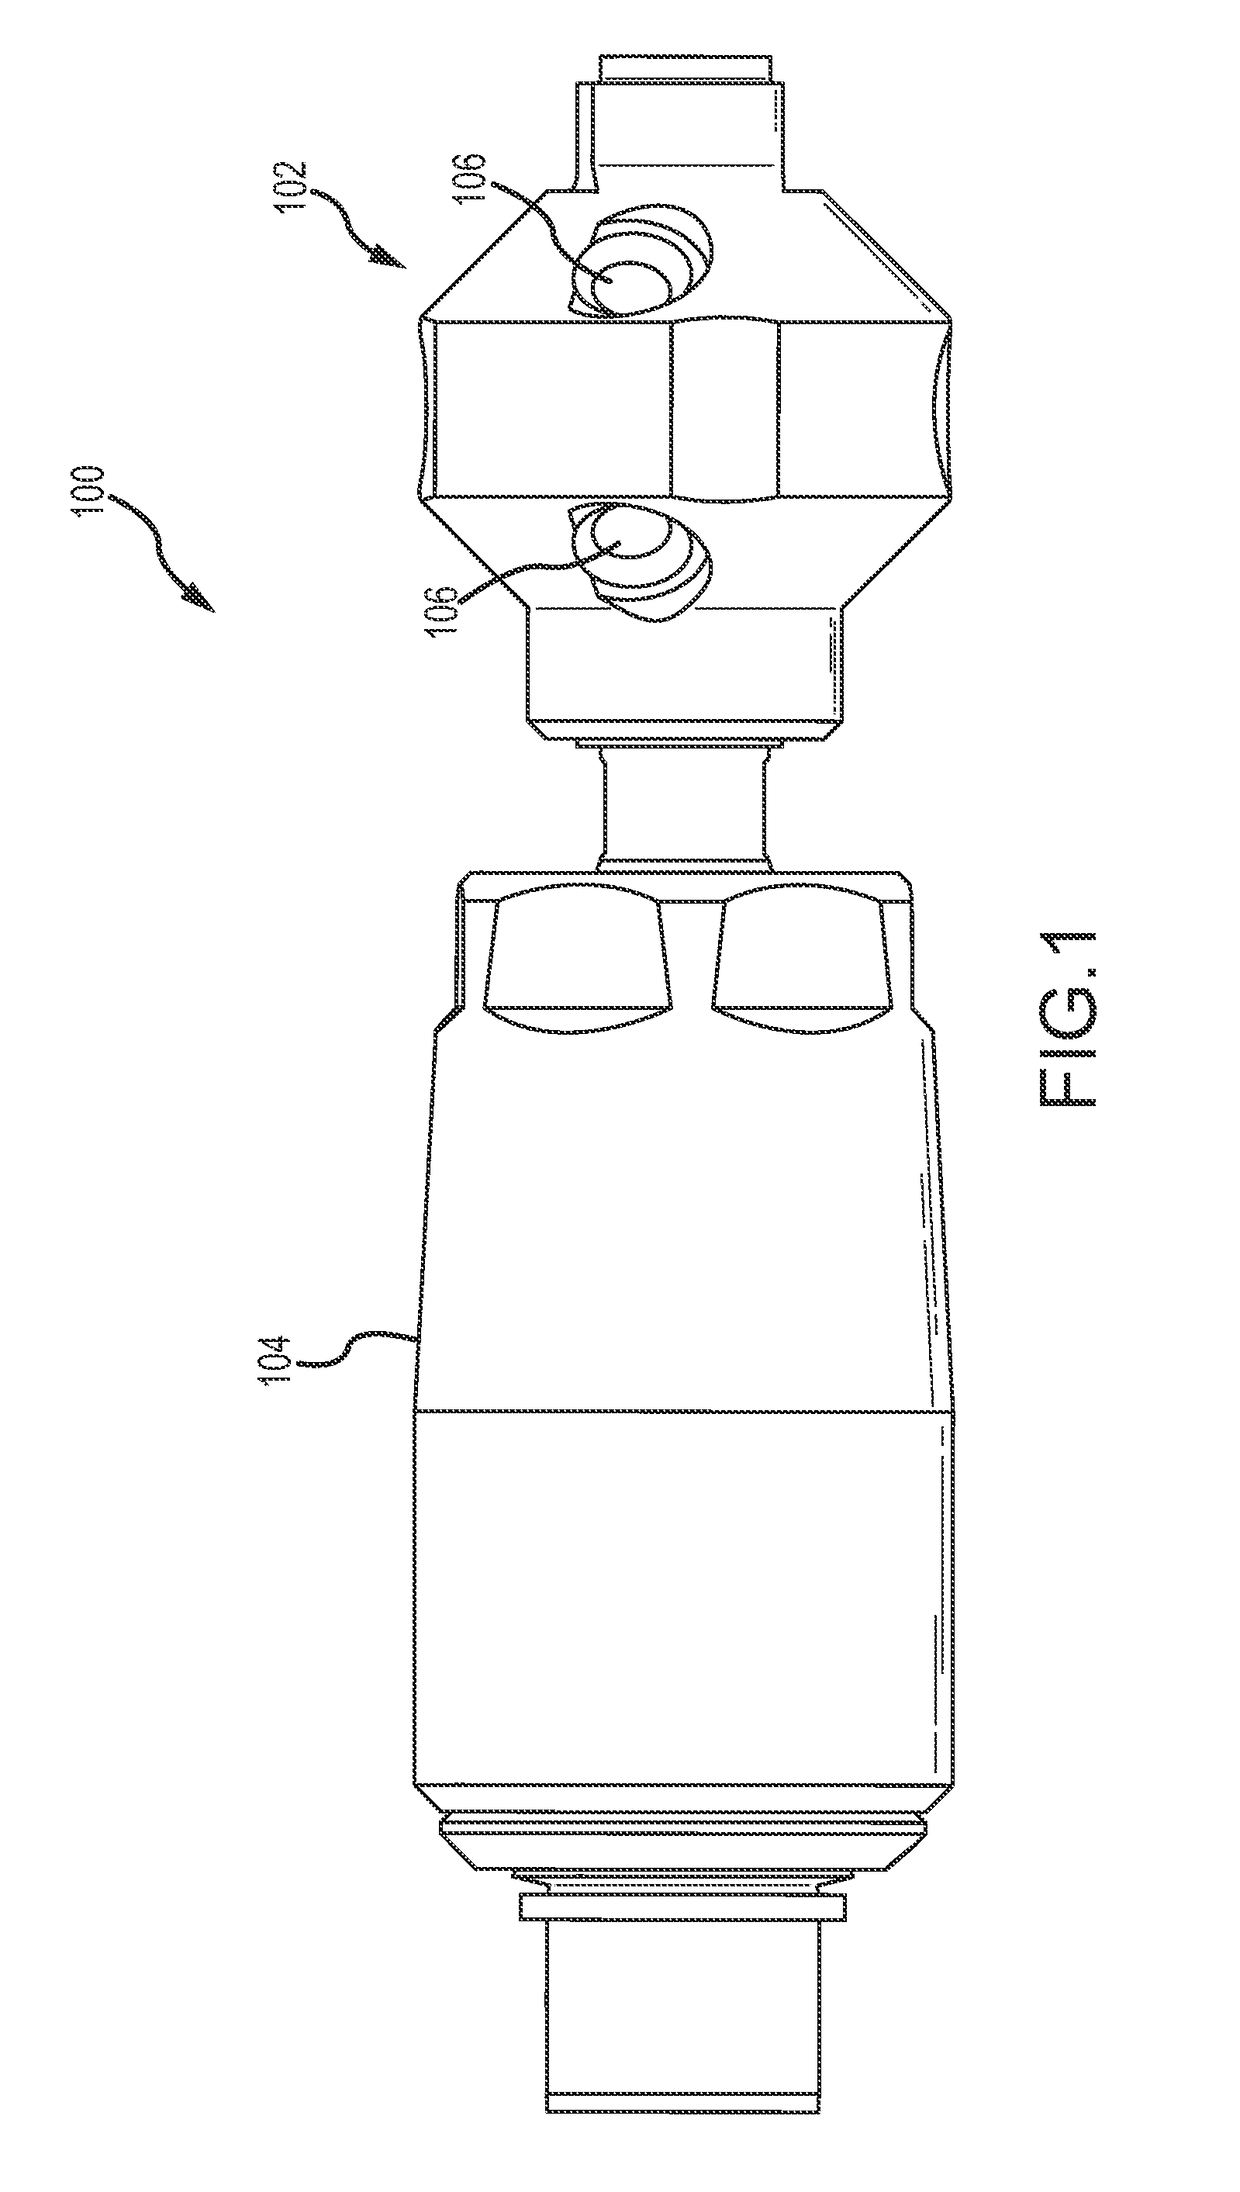 Apparatus for retarding rotary nozzle speed